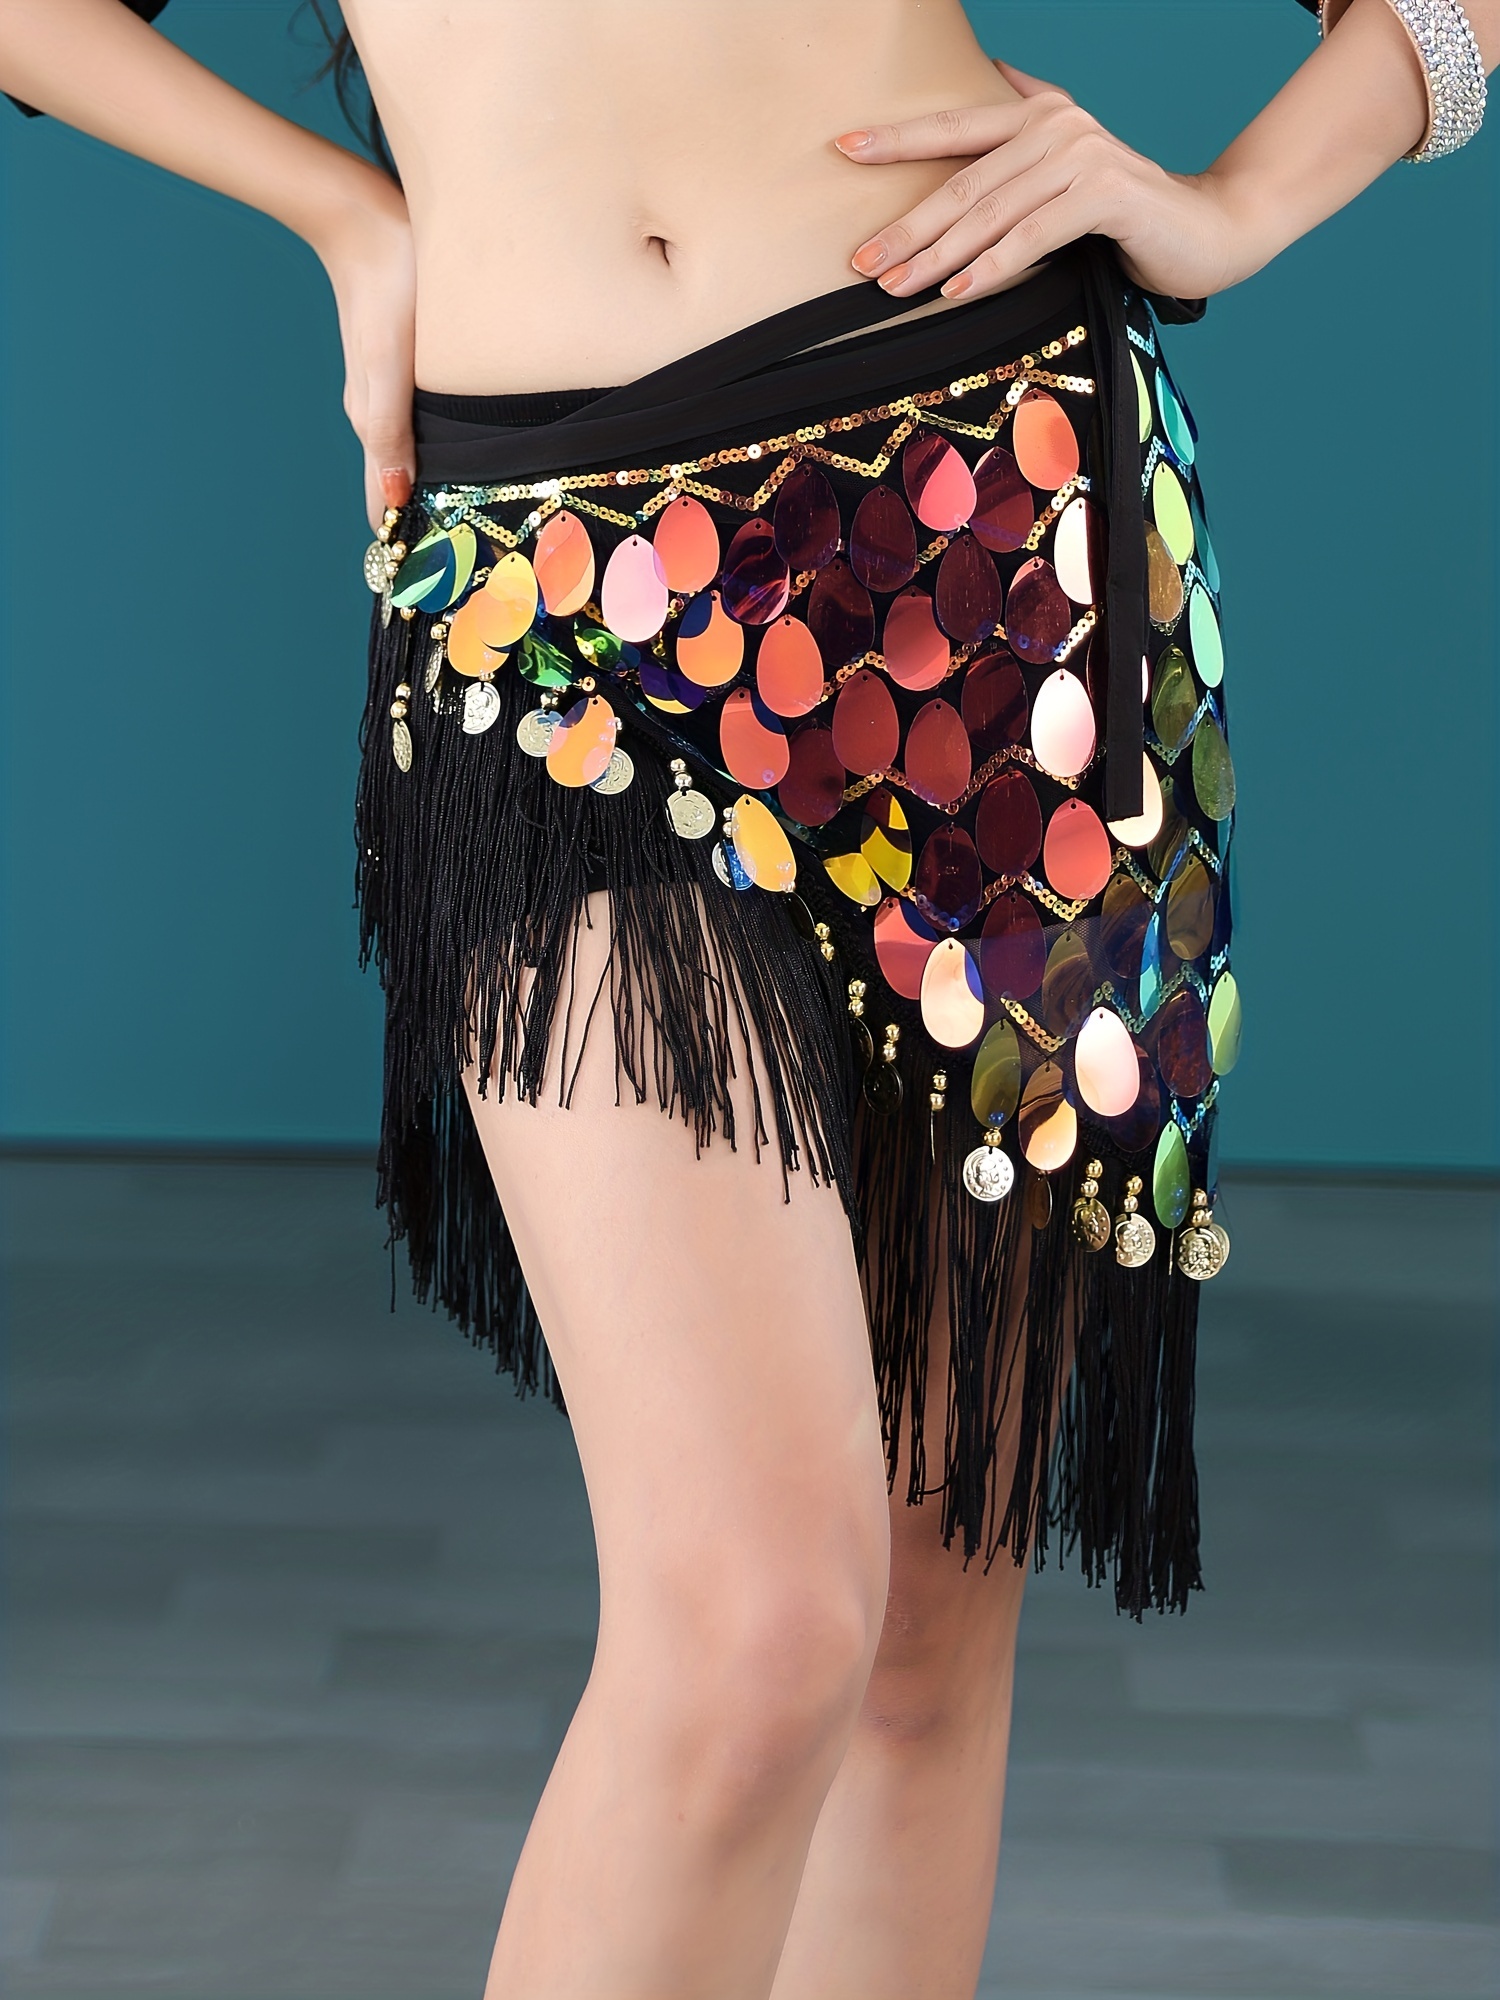 Hip Shakers Sexy Burlesque Beaded Embellished Sequin Belly Dance Bra Top